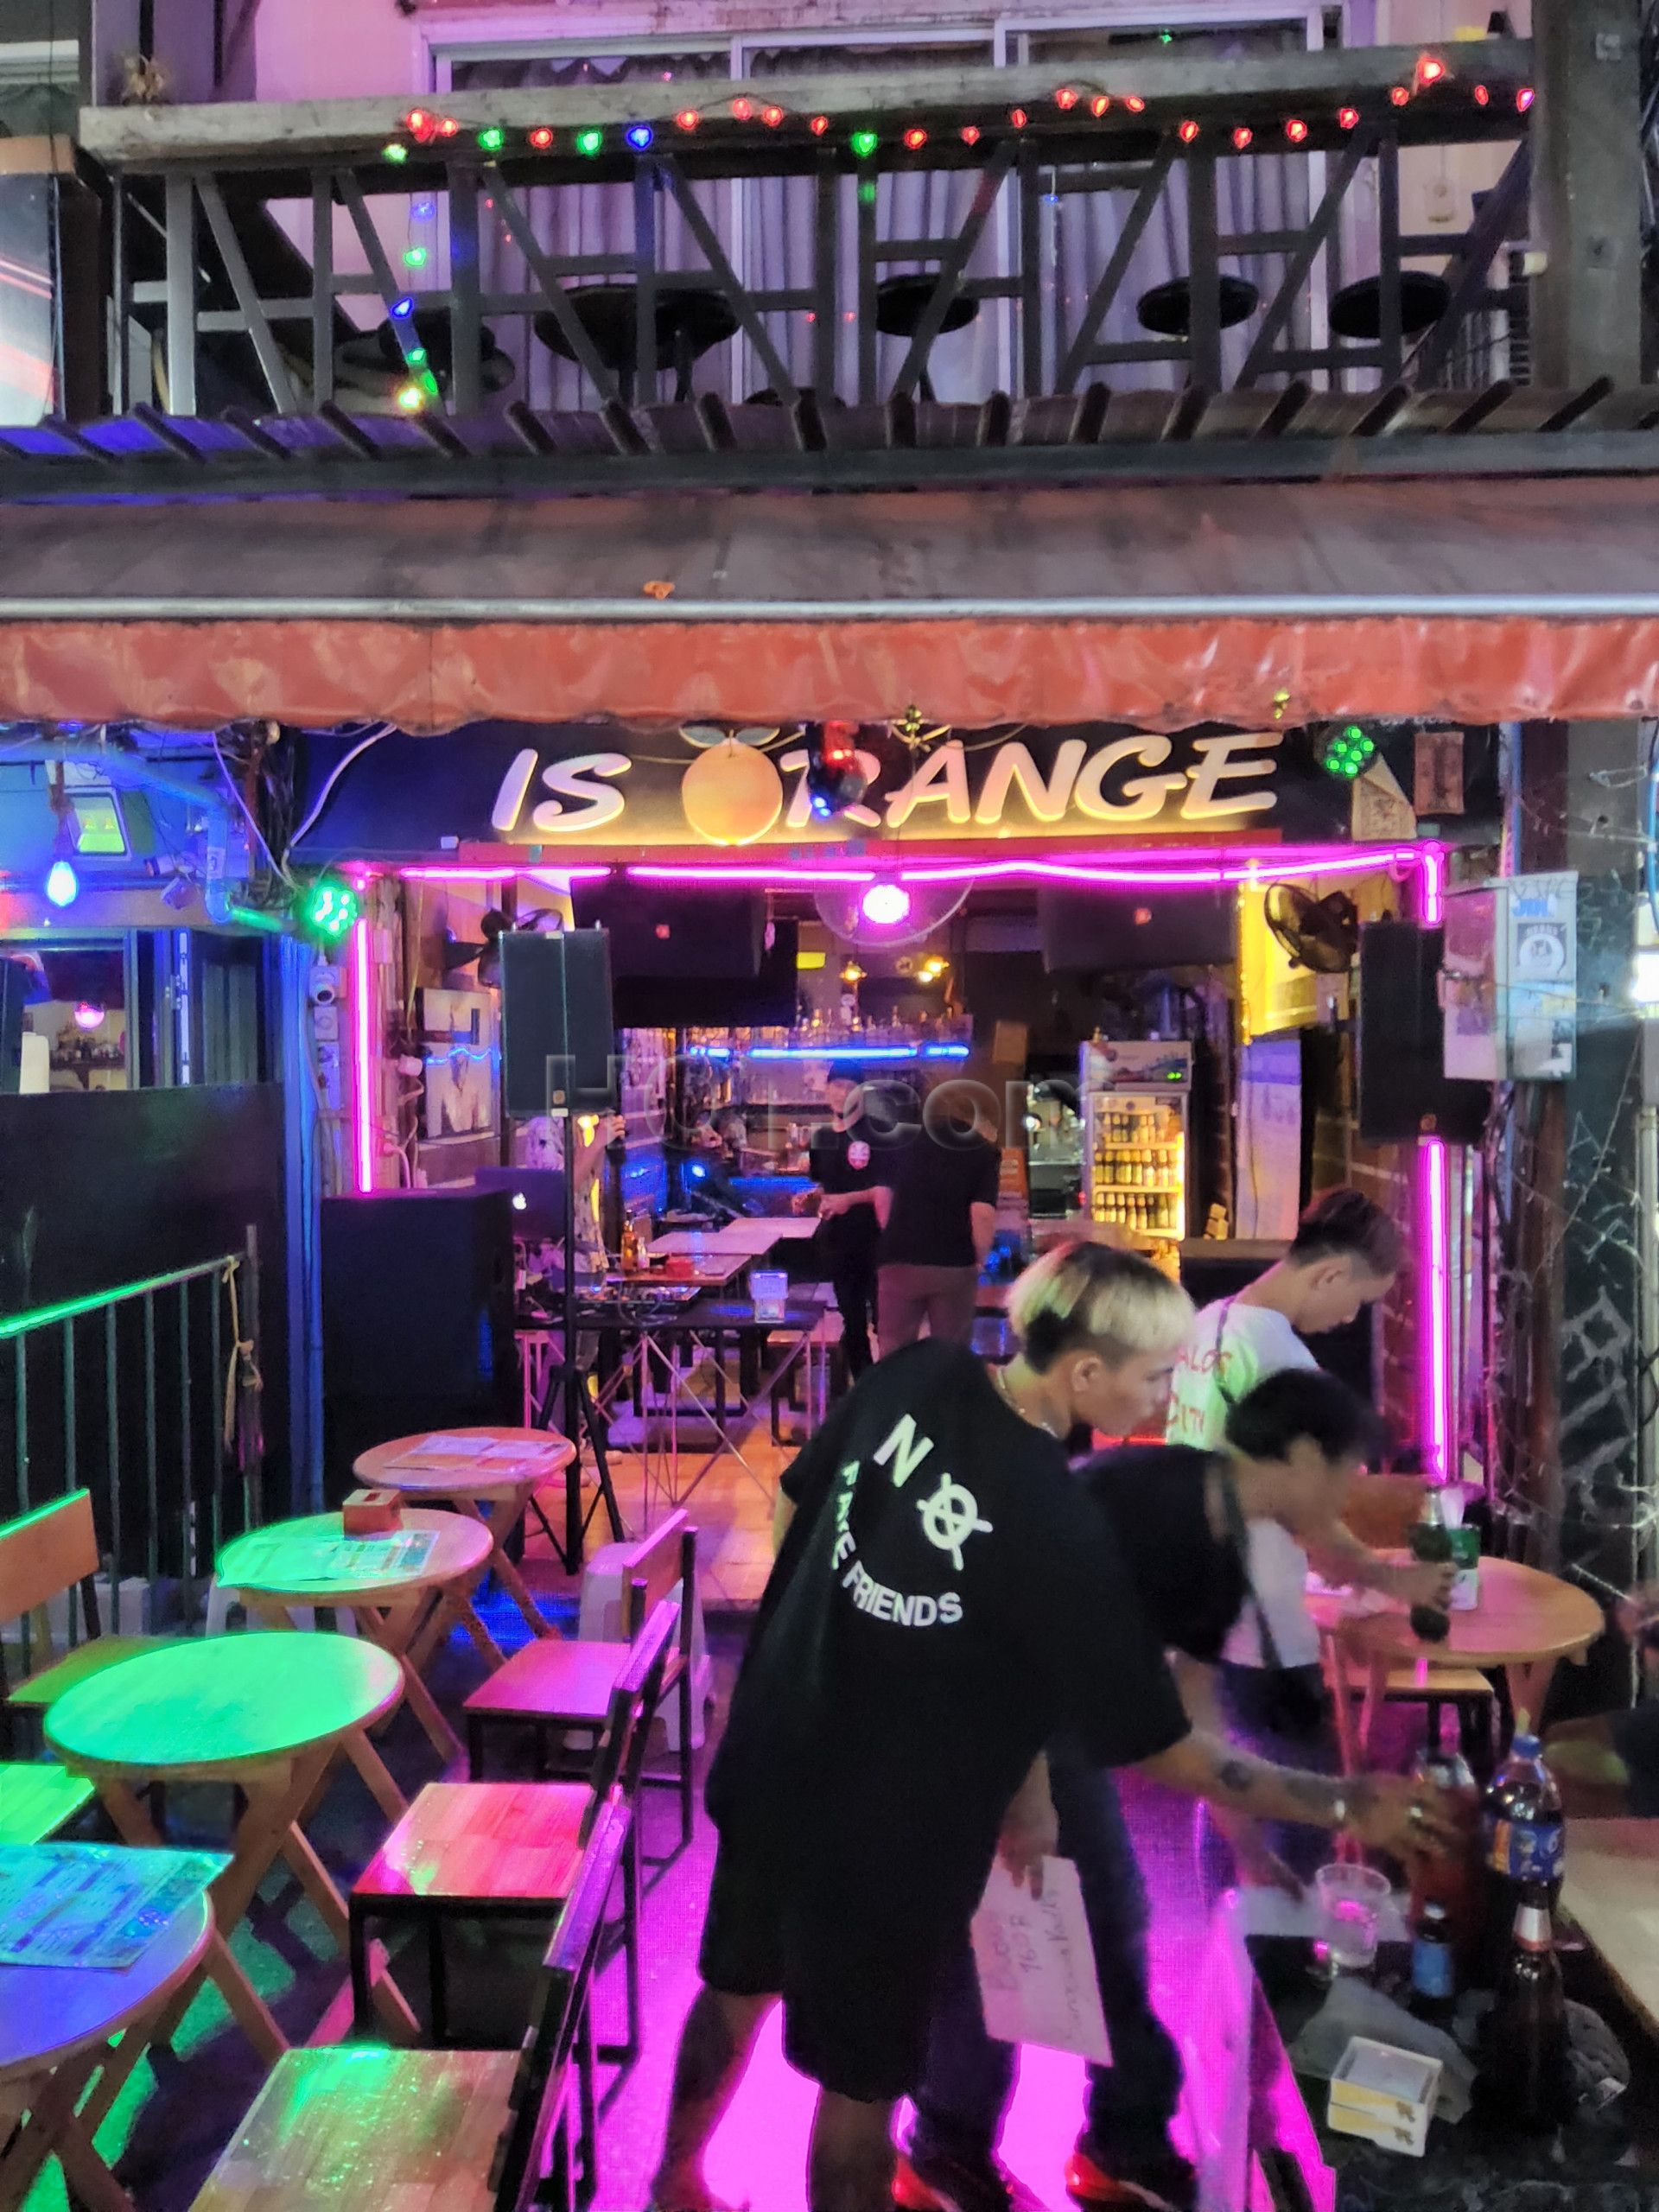 Bangkok, Thailand Is Orange